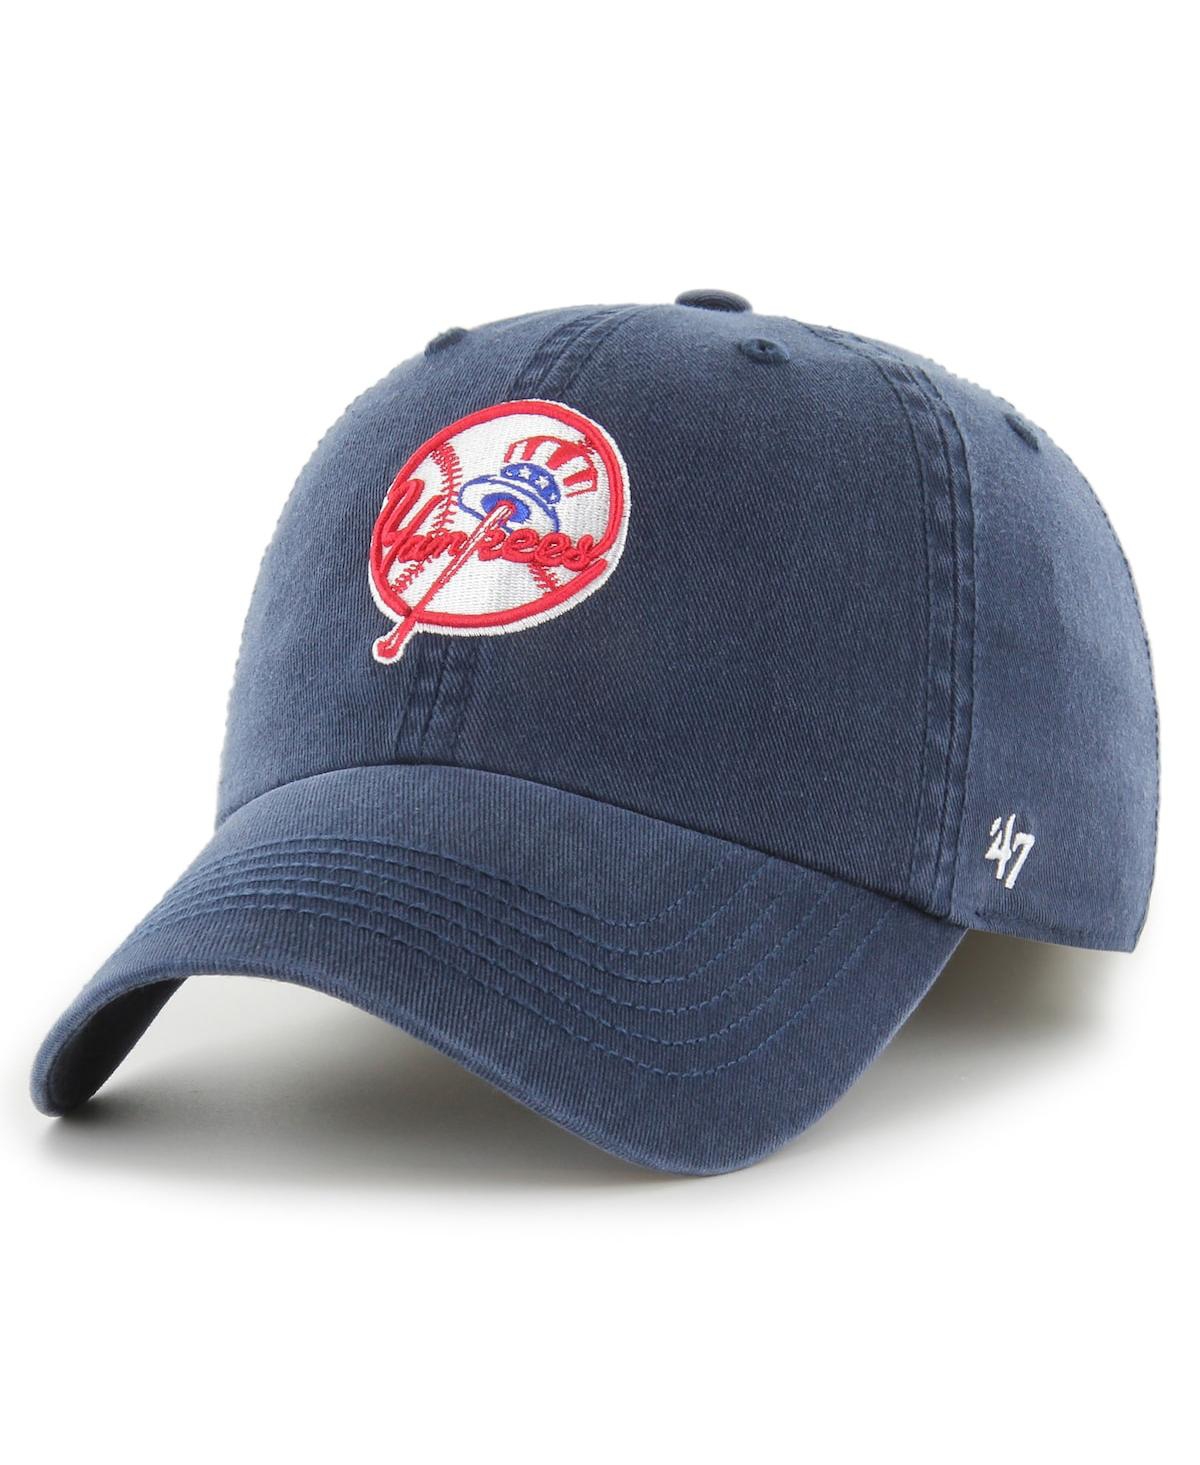 Men's '47 Brand Navy New York Yankees Franchise Logo Fitted Hat - Navy